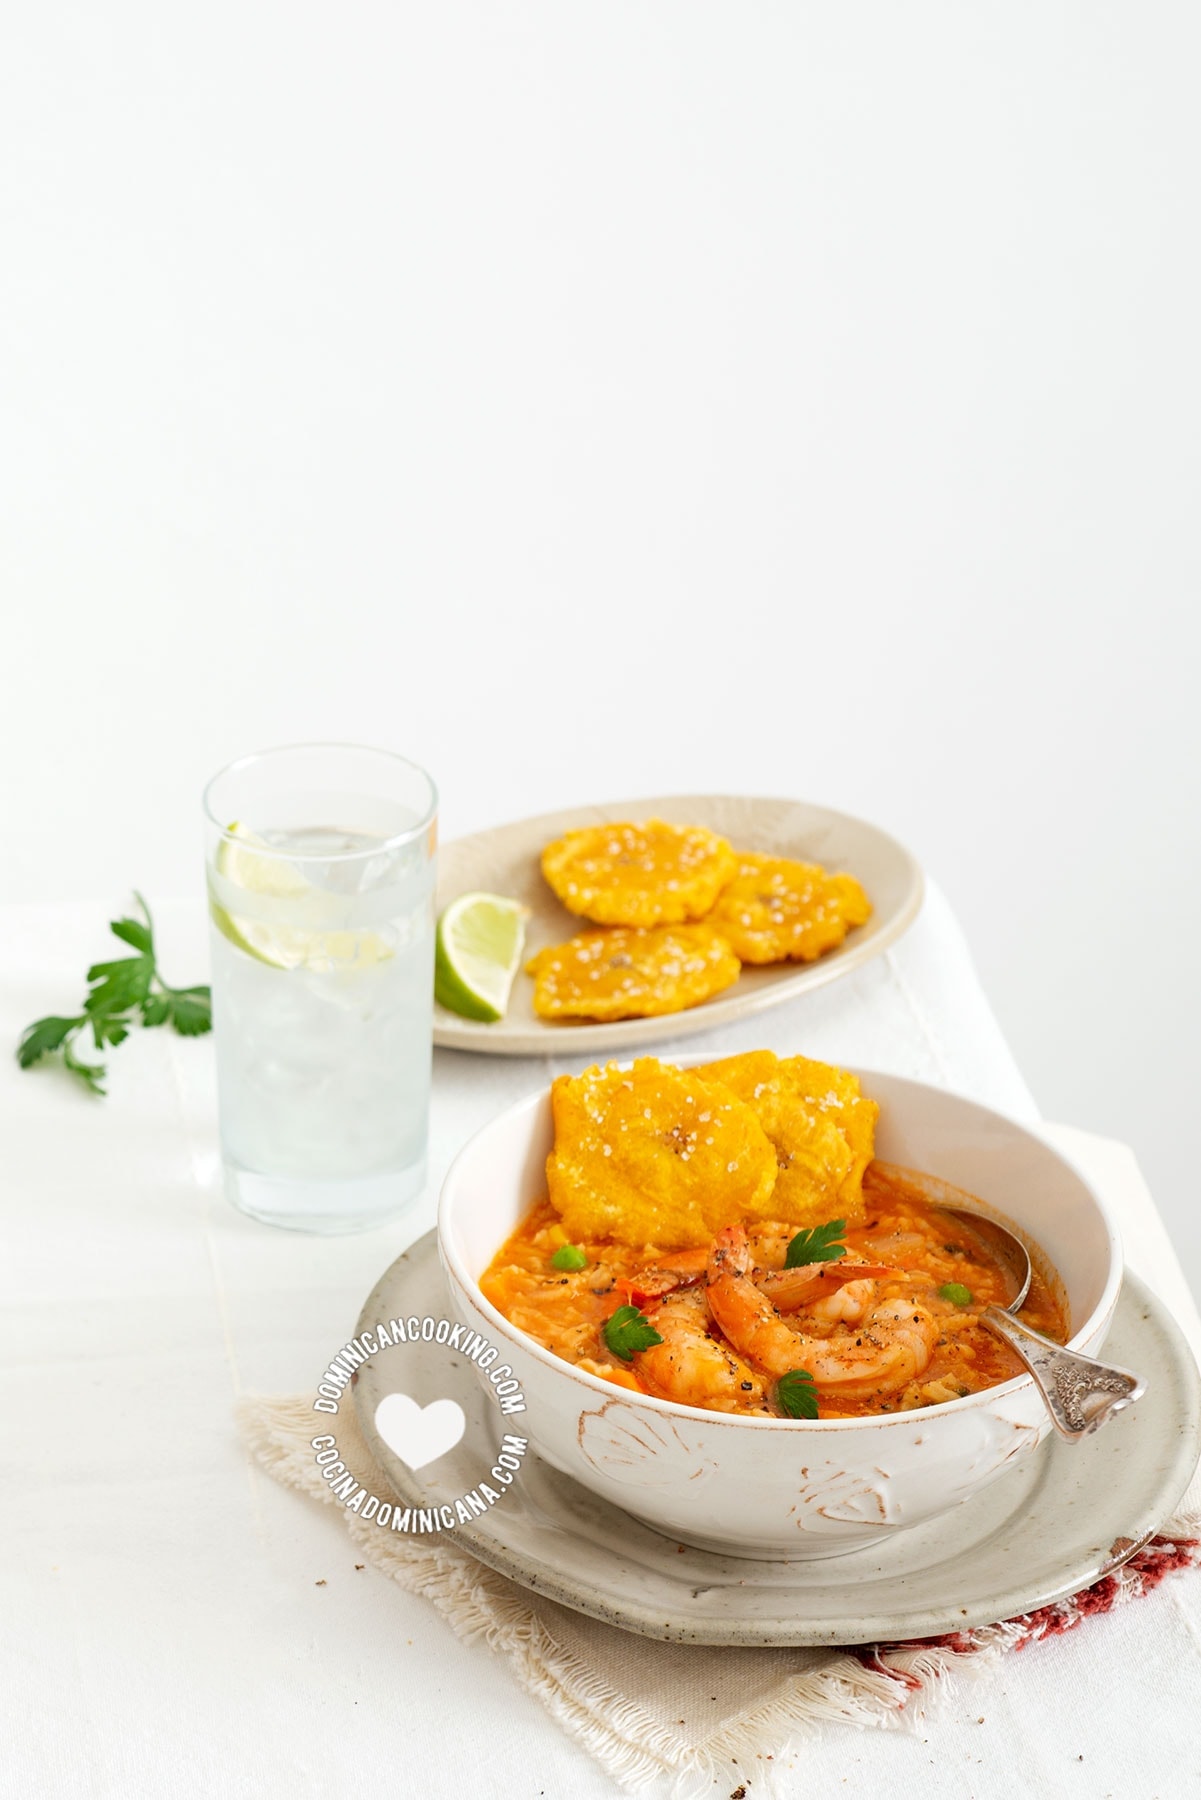 Asopao de camarones (shrimp and rice pottage).